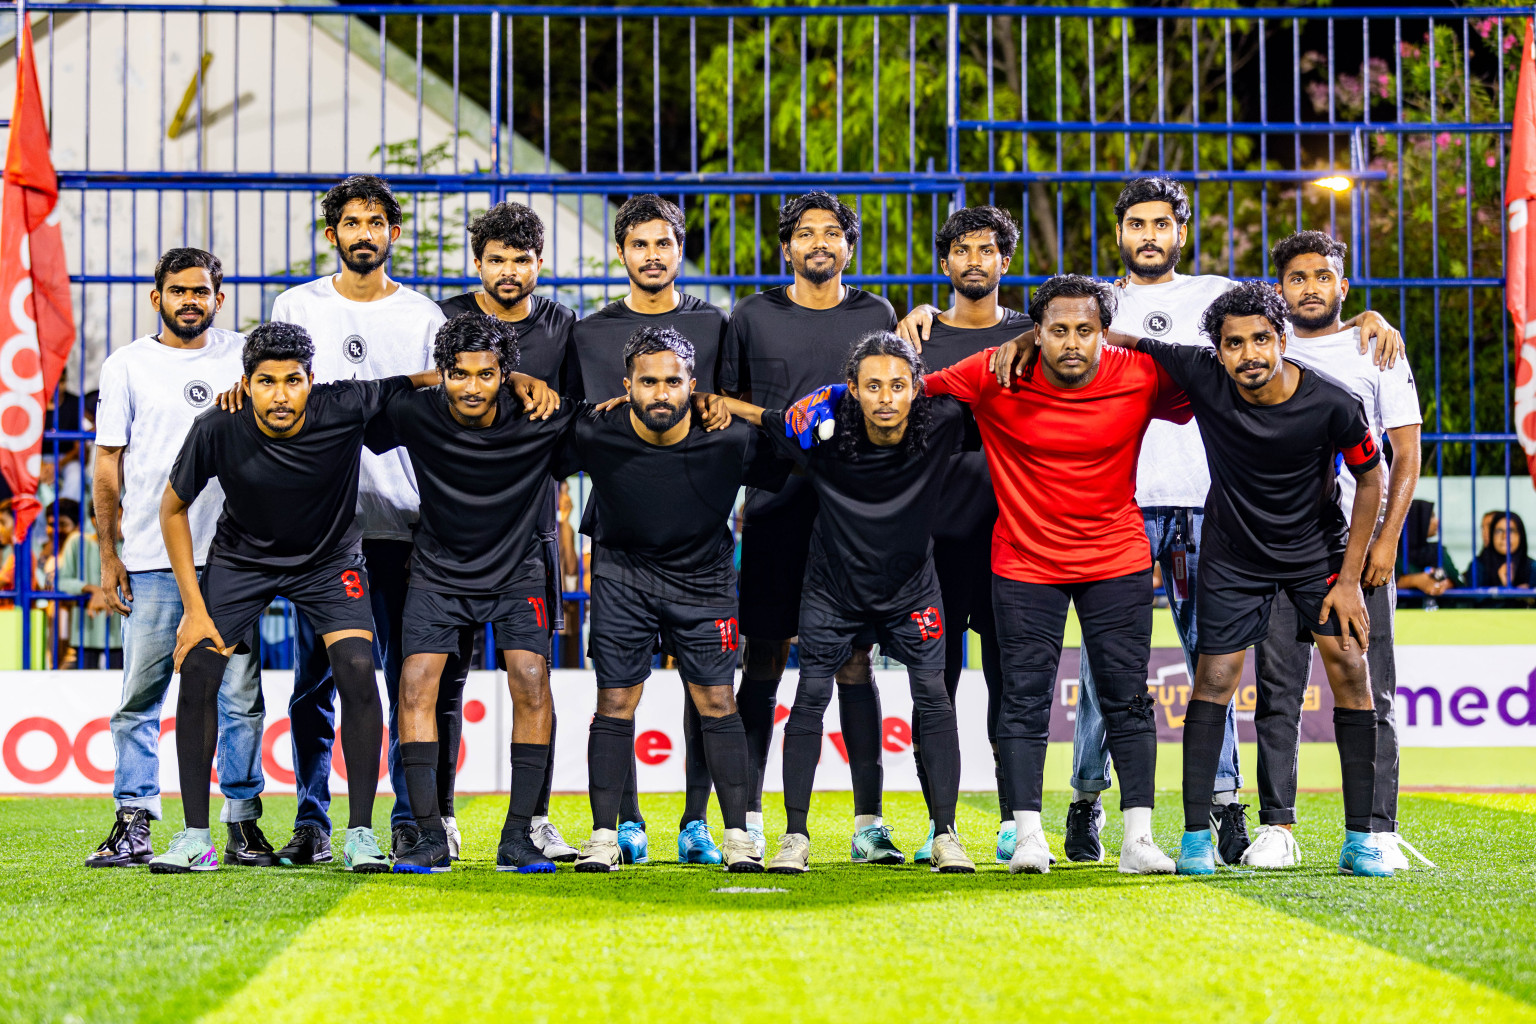 BK Sports Club vs United V in Day 2 of Eydhafushi Futsal Cup 2024 was held on Tuesday, 9th April 2024, in B Eydhafushi, Maldives Photos: Nausham Waheed / images.mv